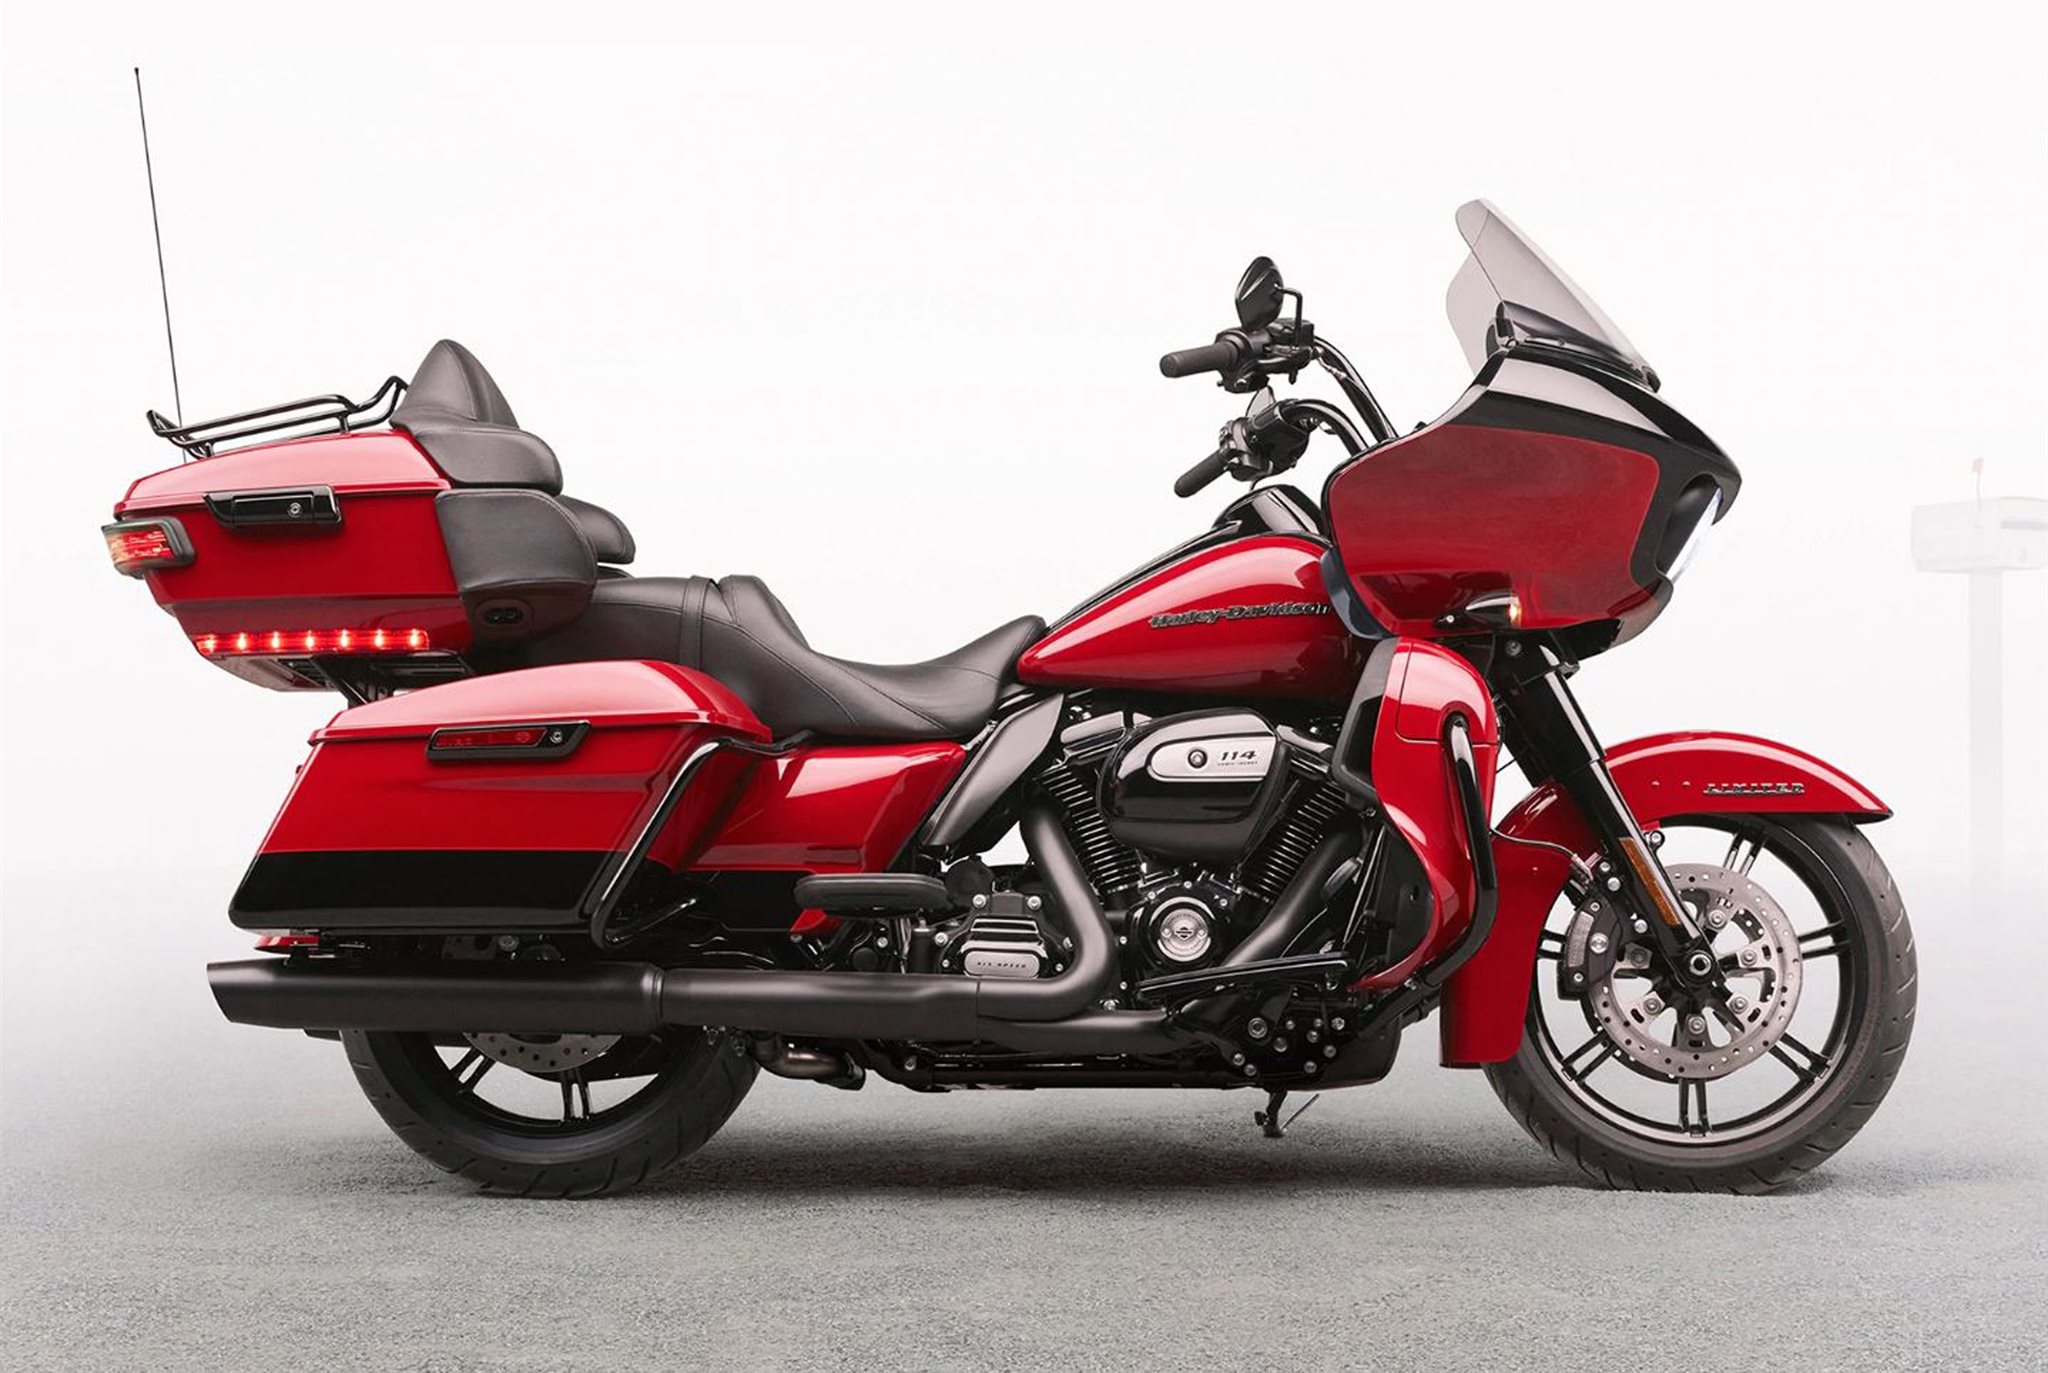 Motorrad Vergleich Harley Davidson Electra Glide Ultra Classic Flhtcu 2015 Vs Harley Davidson Touring Road Glide Limited Fltrk 2020